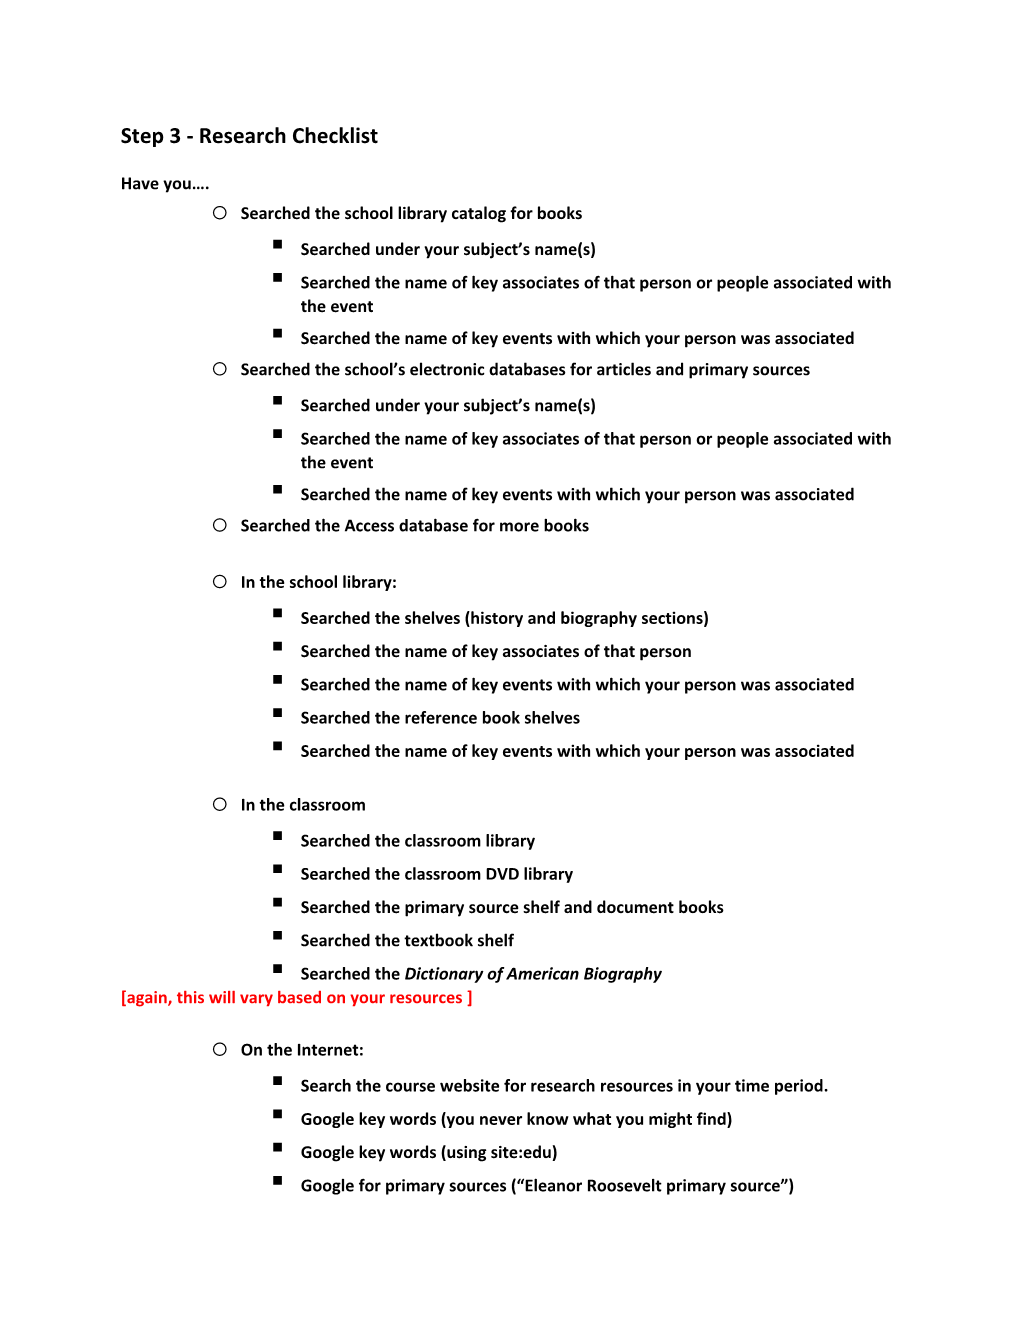 Step 3 - Research Checklist